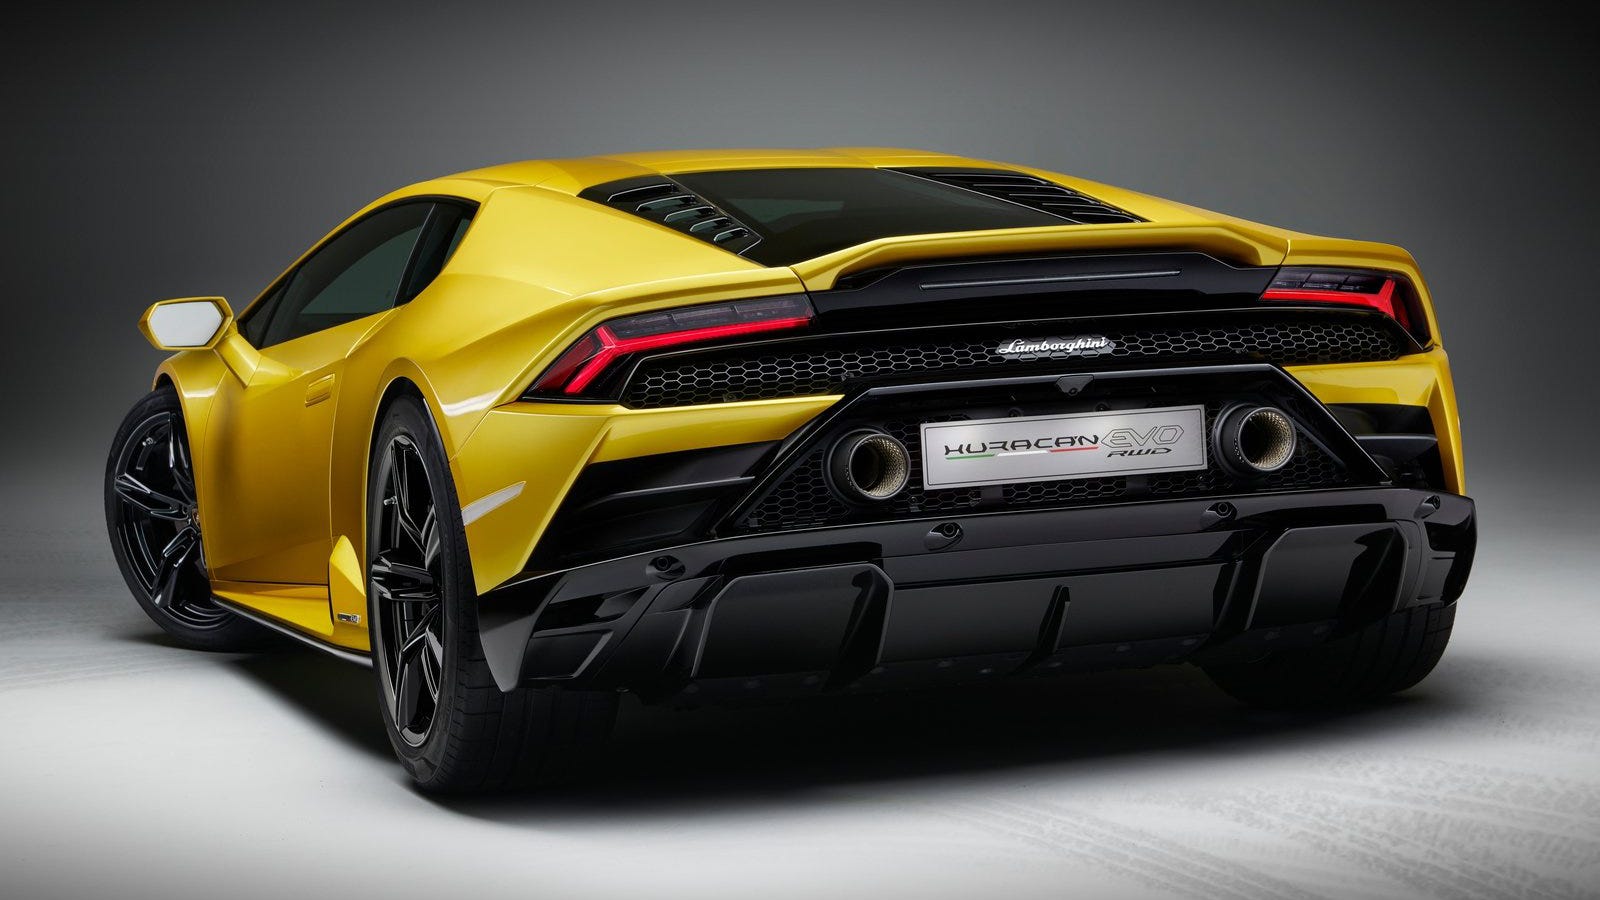 Fotos - Lamborghini Huracán Evo RWD | Página 2 | BMW FAQ Club